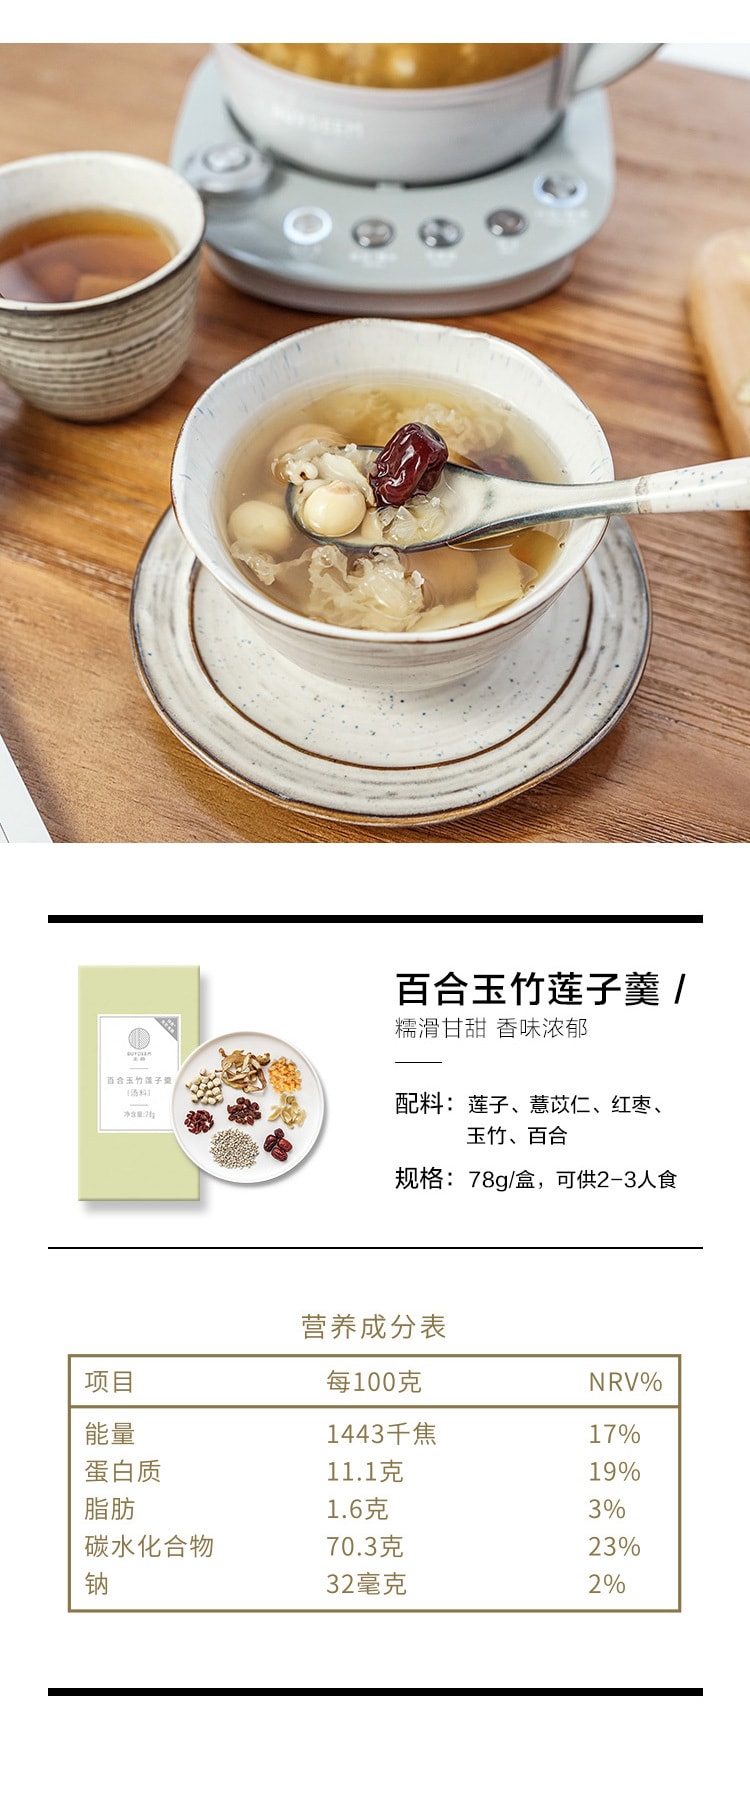 Chinese tremella soup set 4 boxes